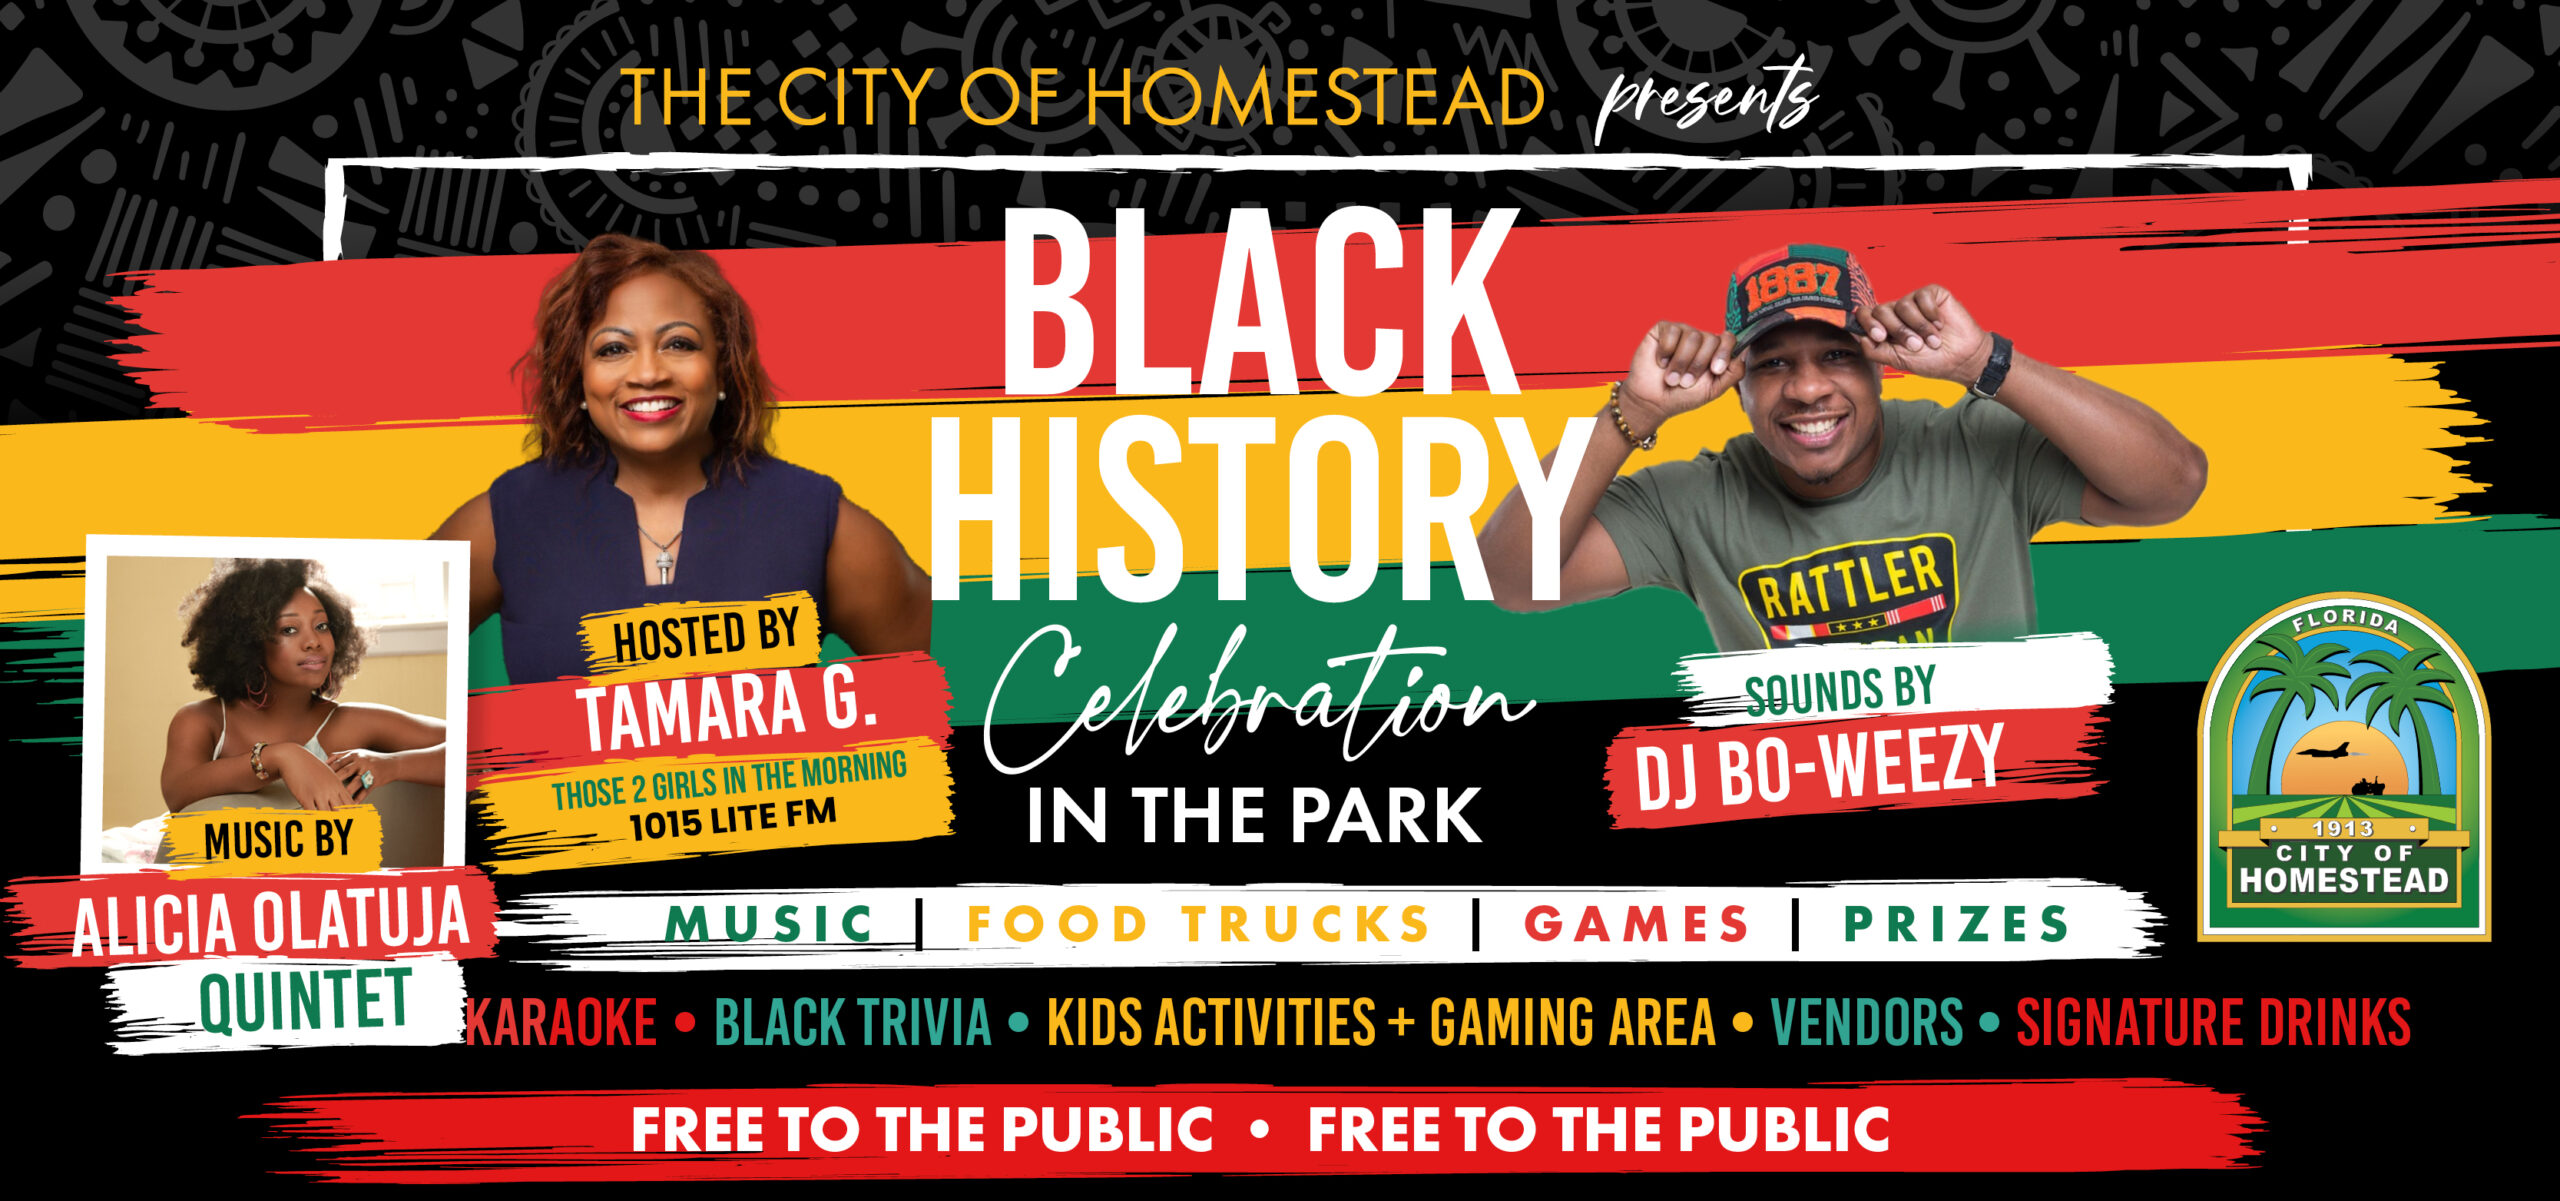 Black History Celebration in the Park